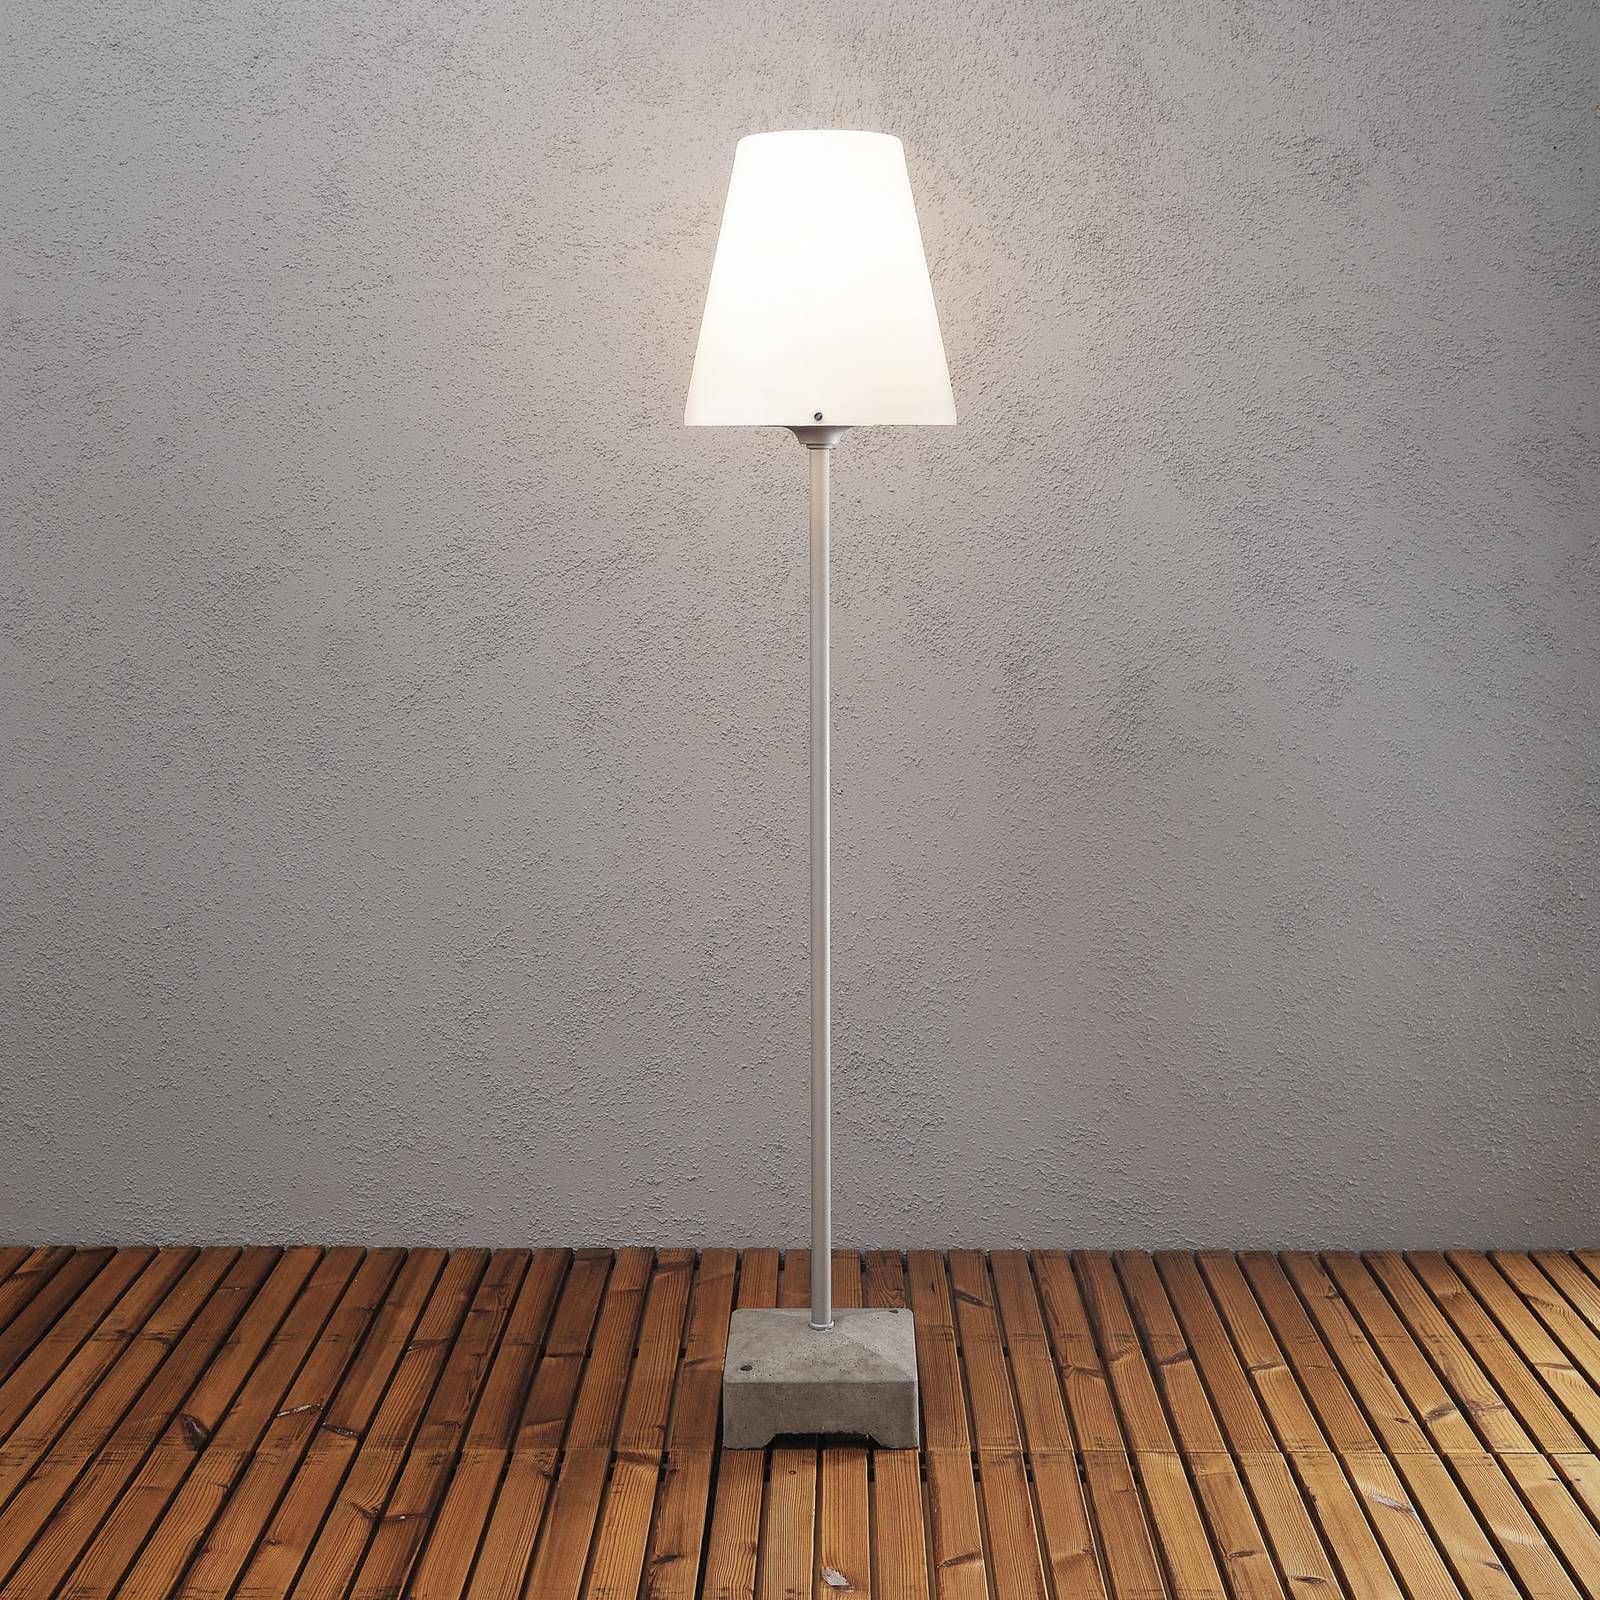 Konstsmide Stojaca lampa NEW LUCCA na terasu, 131 cm, hliník, plast, E27, 60W, K: 131cm